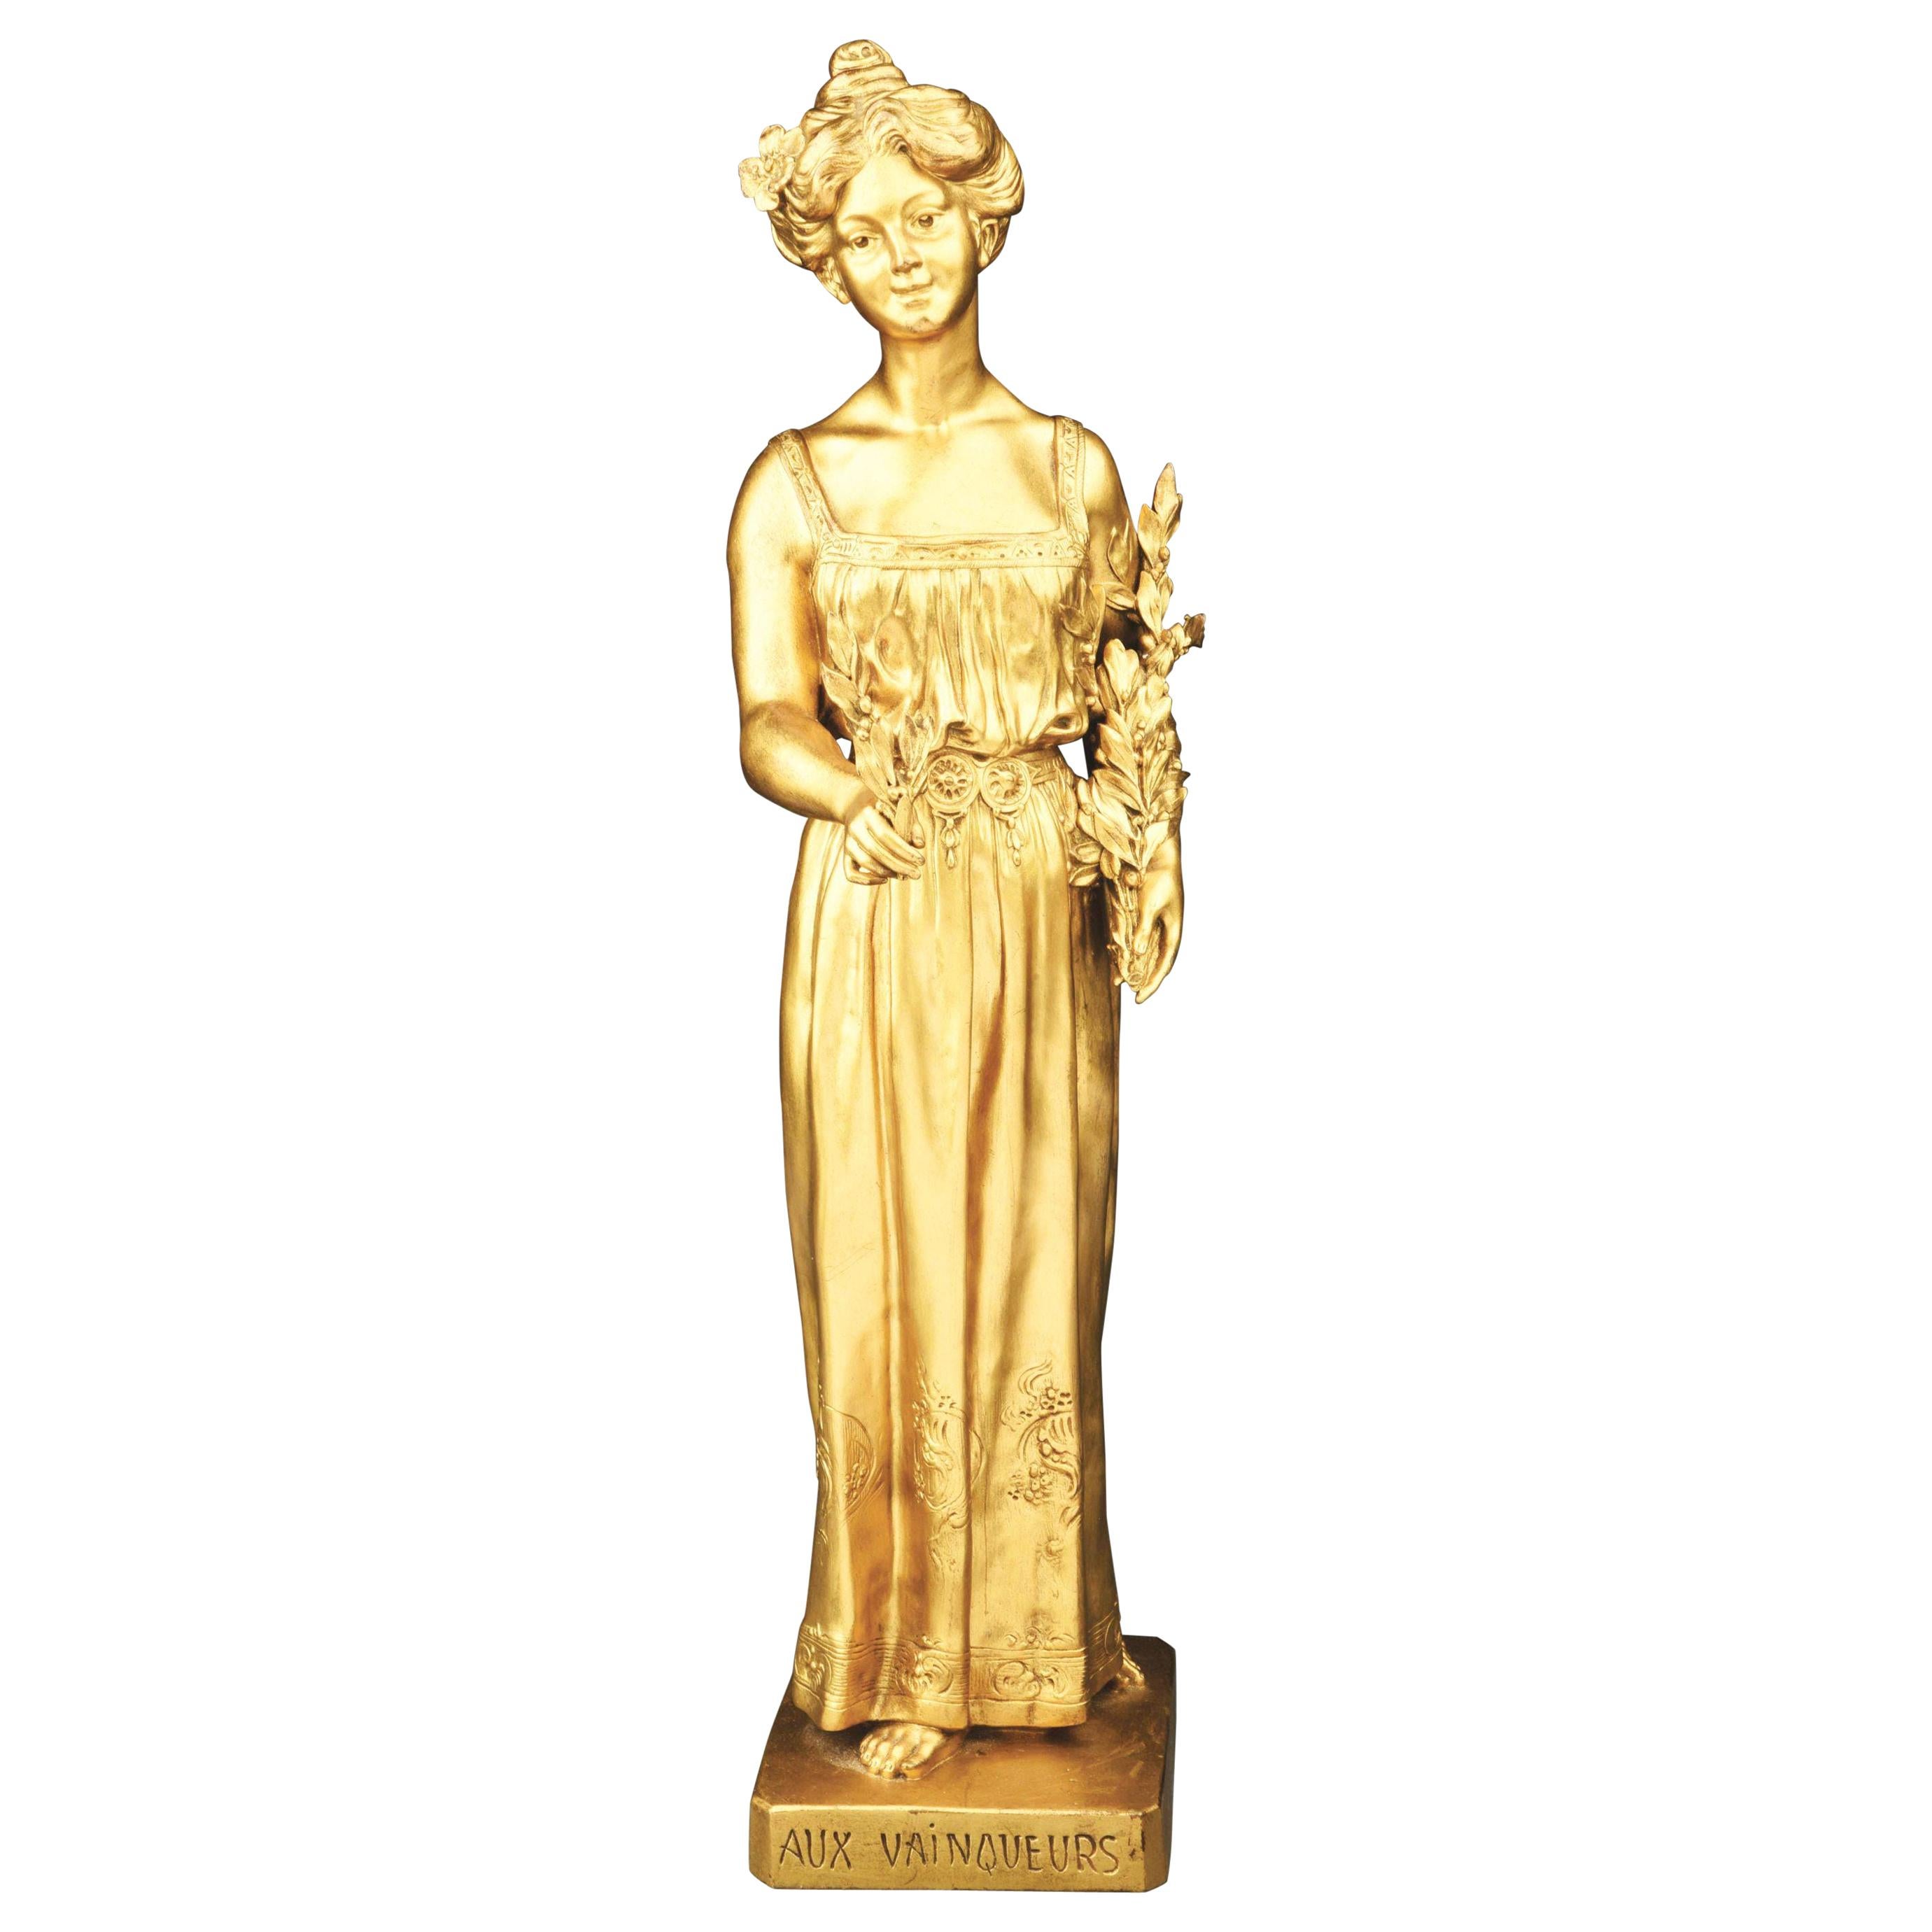 French, Signed A. Vibert", C 1890's, Fine Gilt Bronze Female Statue